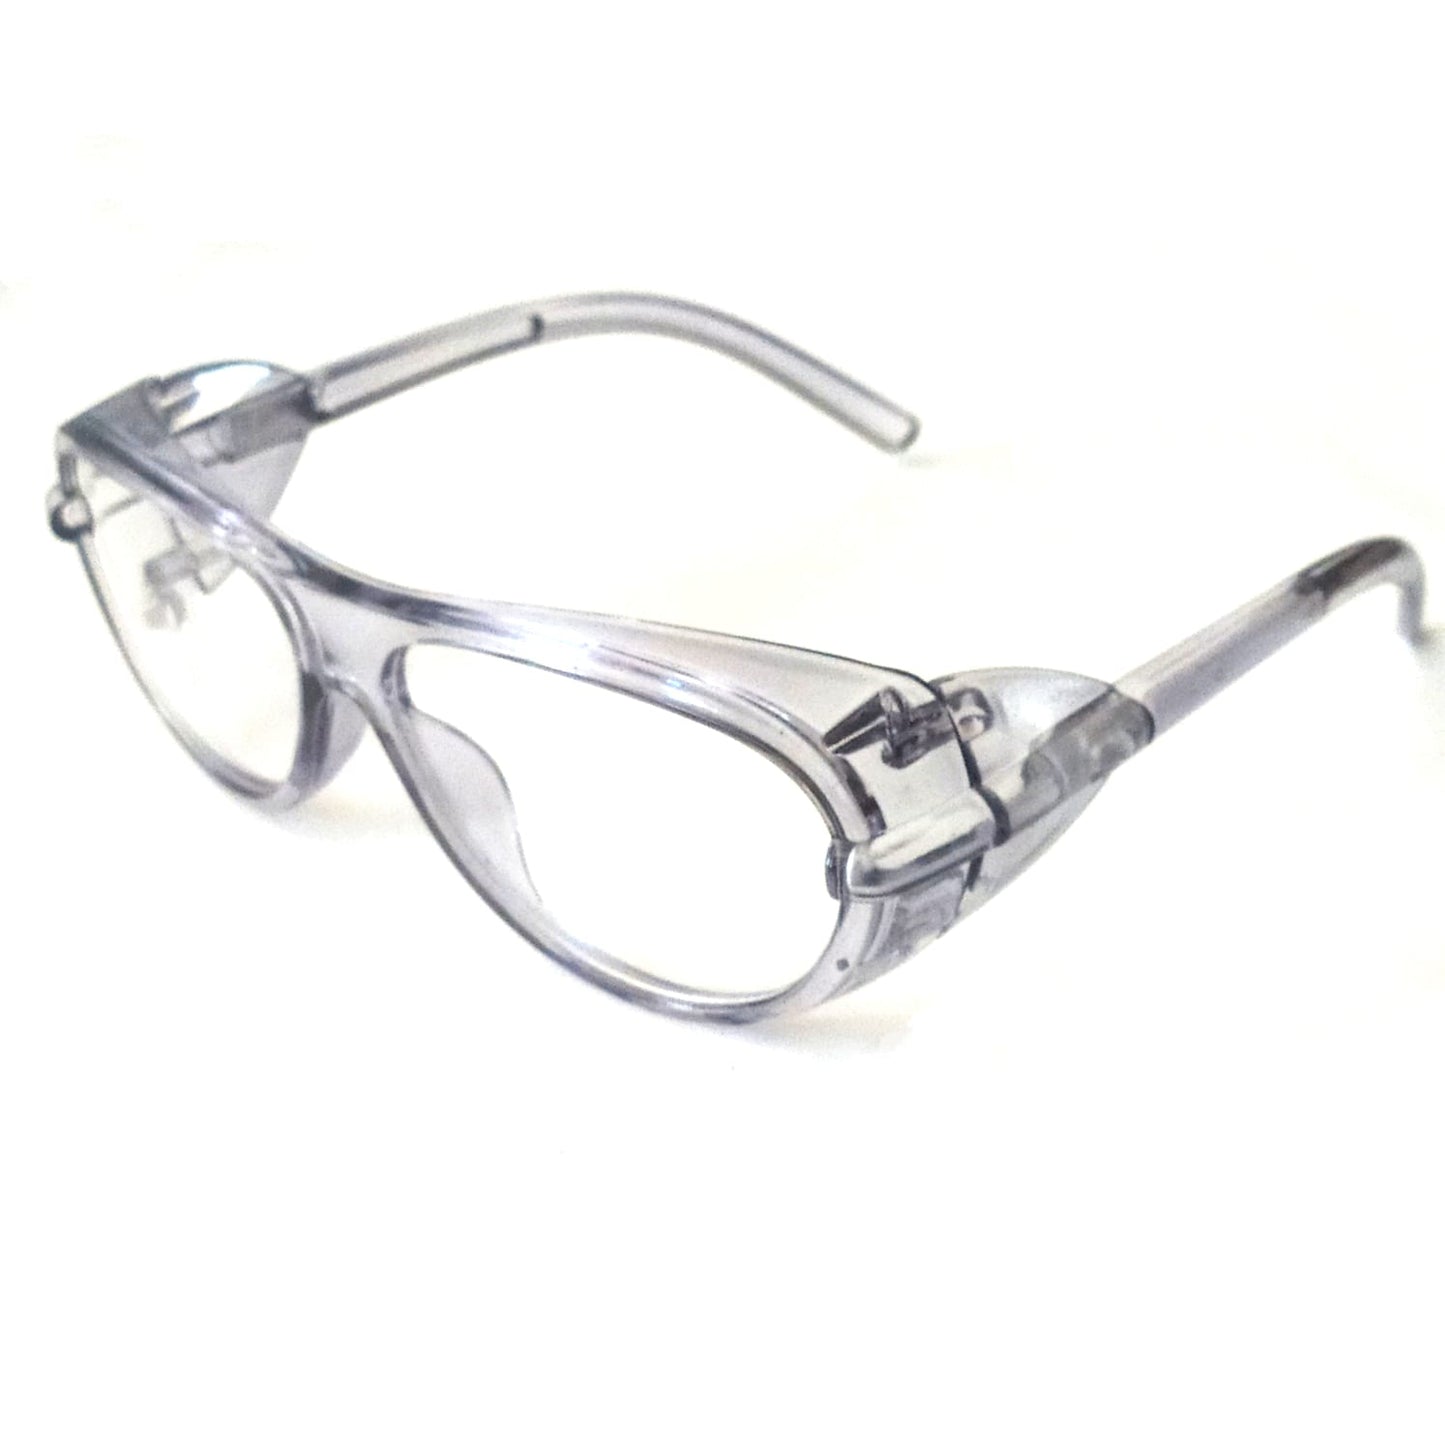 Transparent-Grey-Prescription-Glasses-Safety-Goggles-Sports-Sunglasses